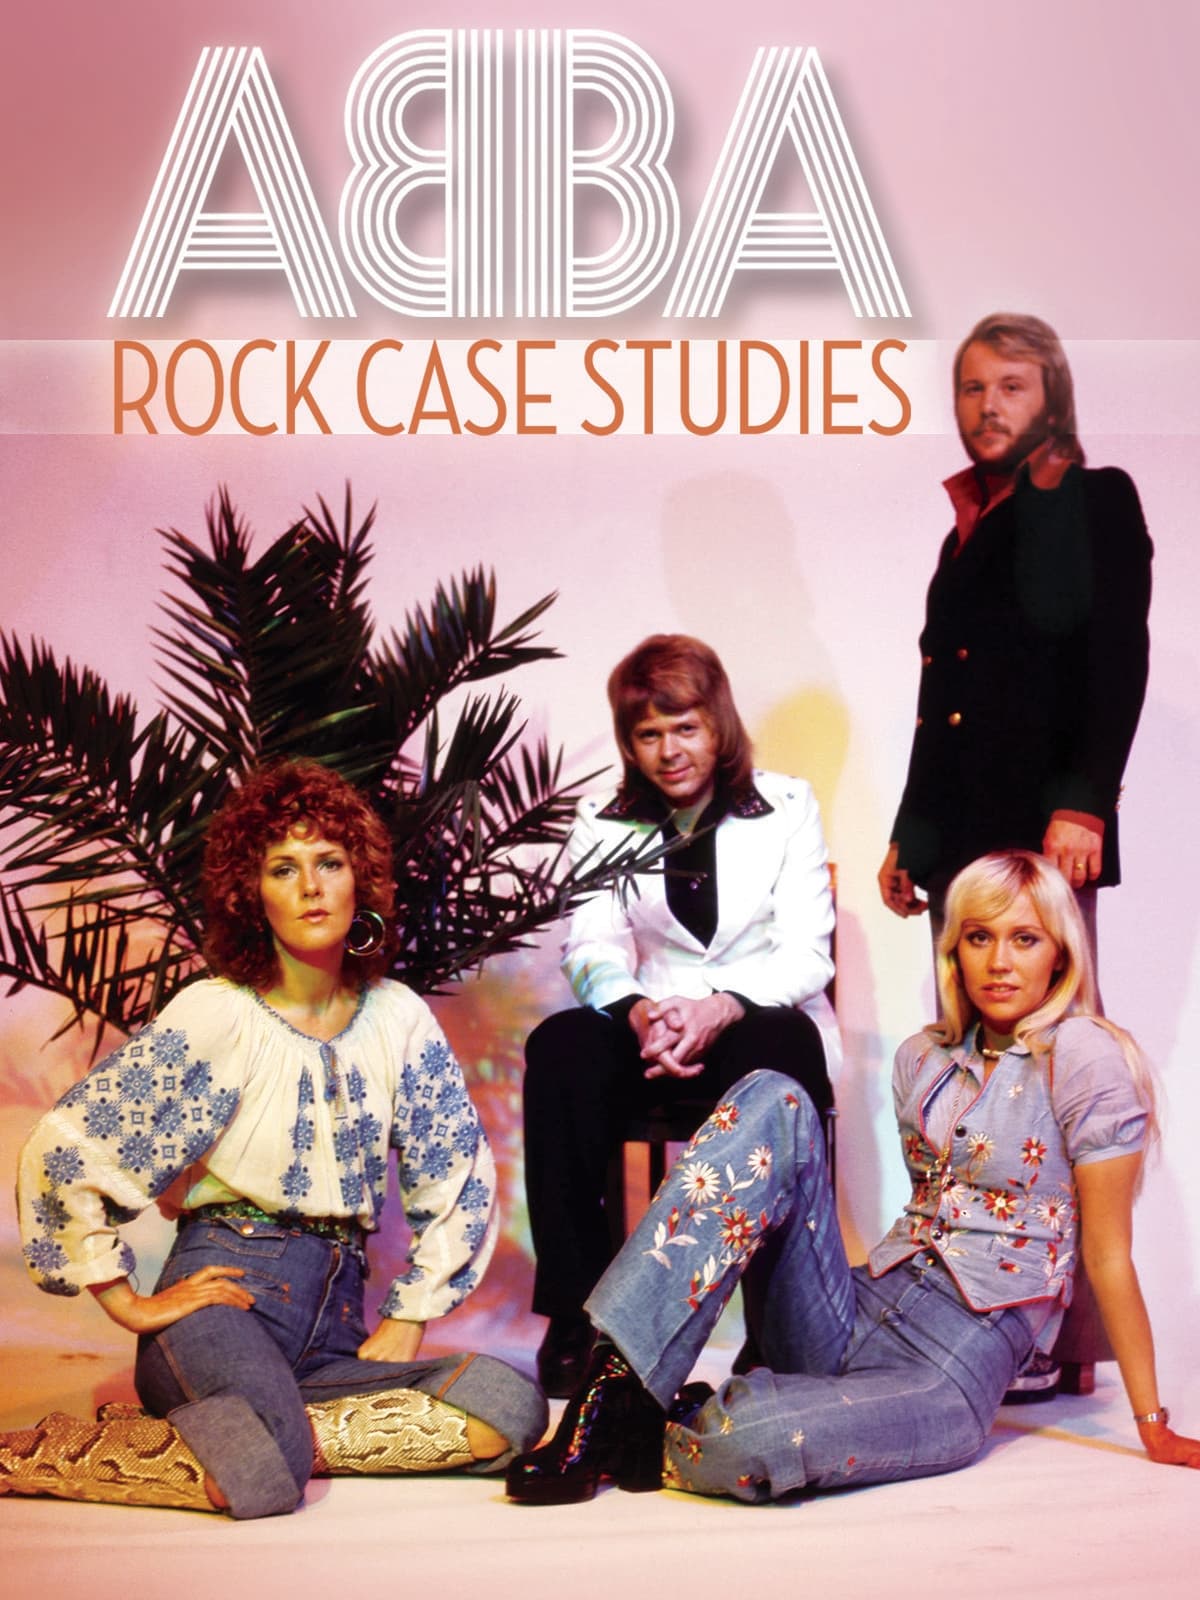 Abba: Rock Case Studies